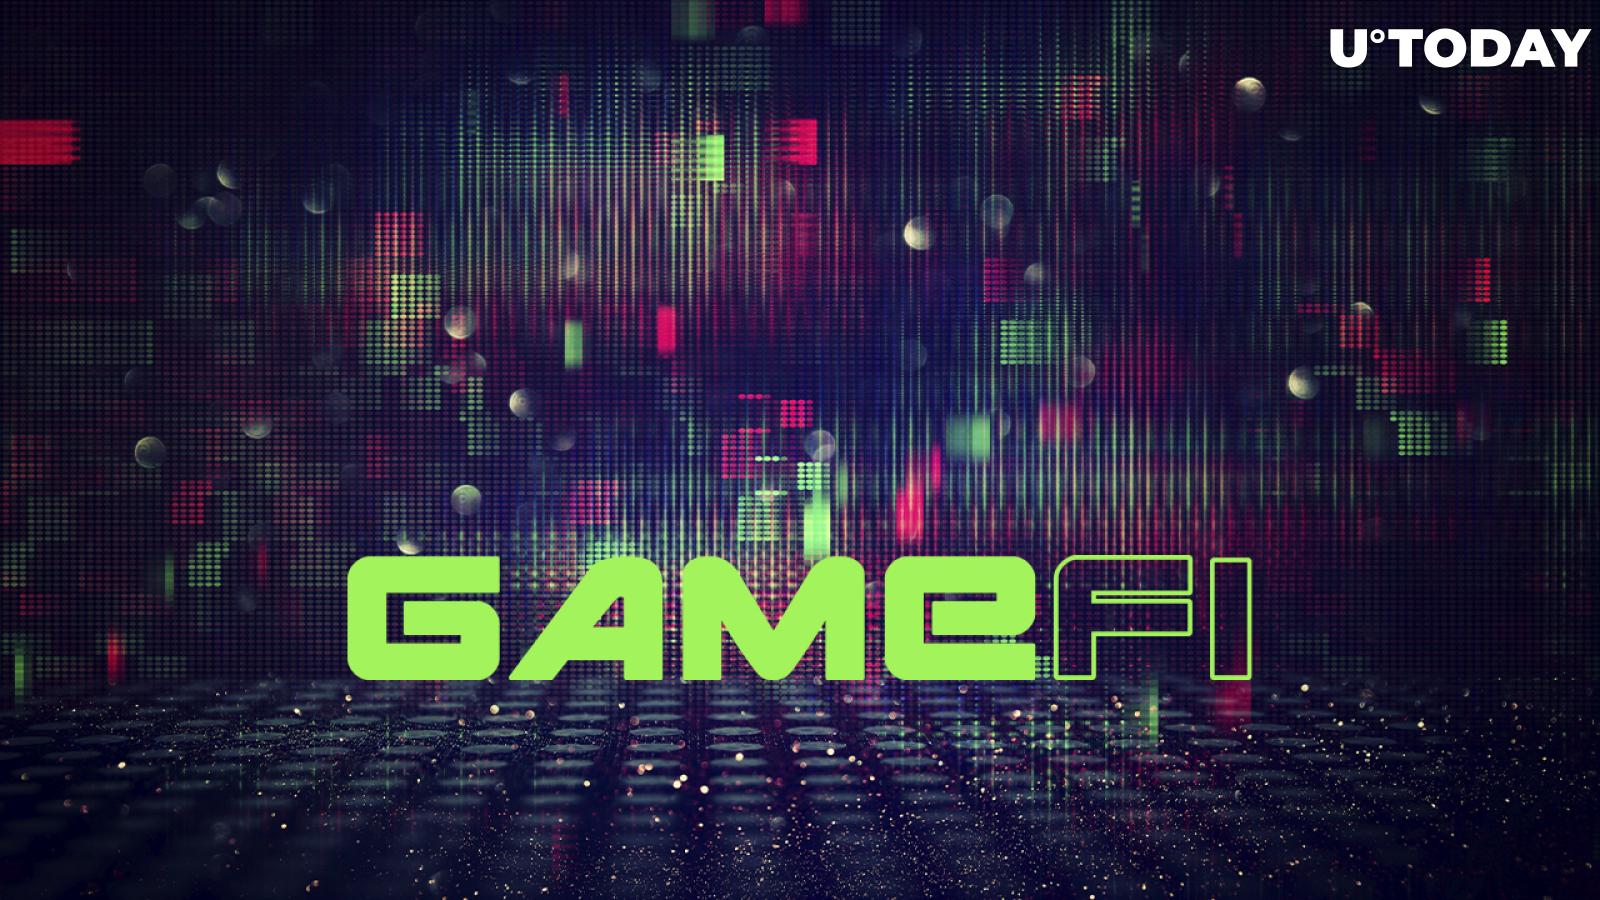 GameFi Major Digital Entertainment Asset Raised $12 Million